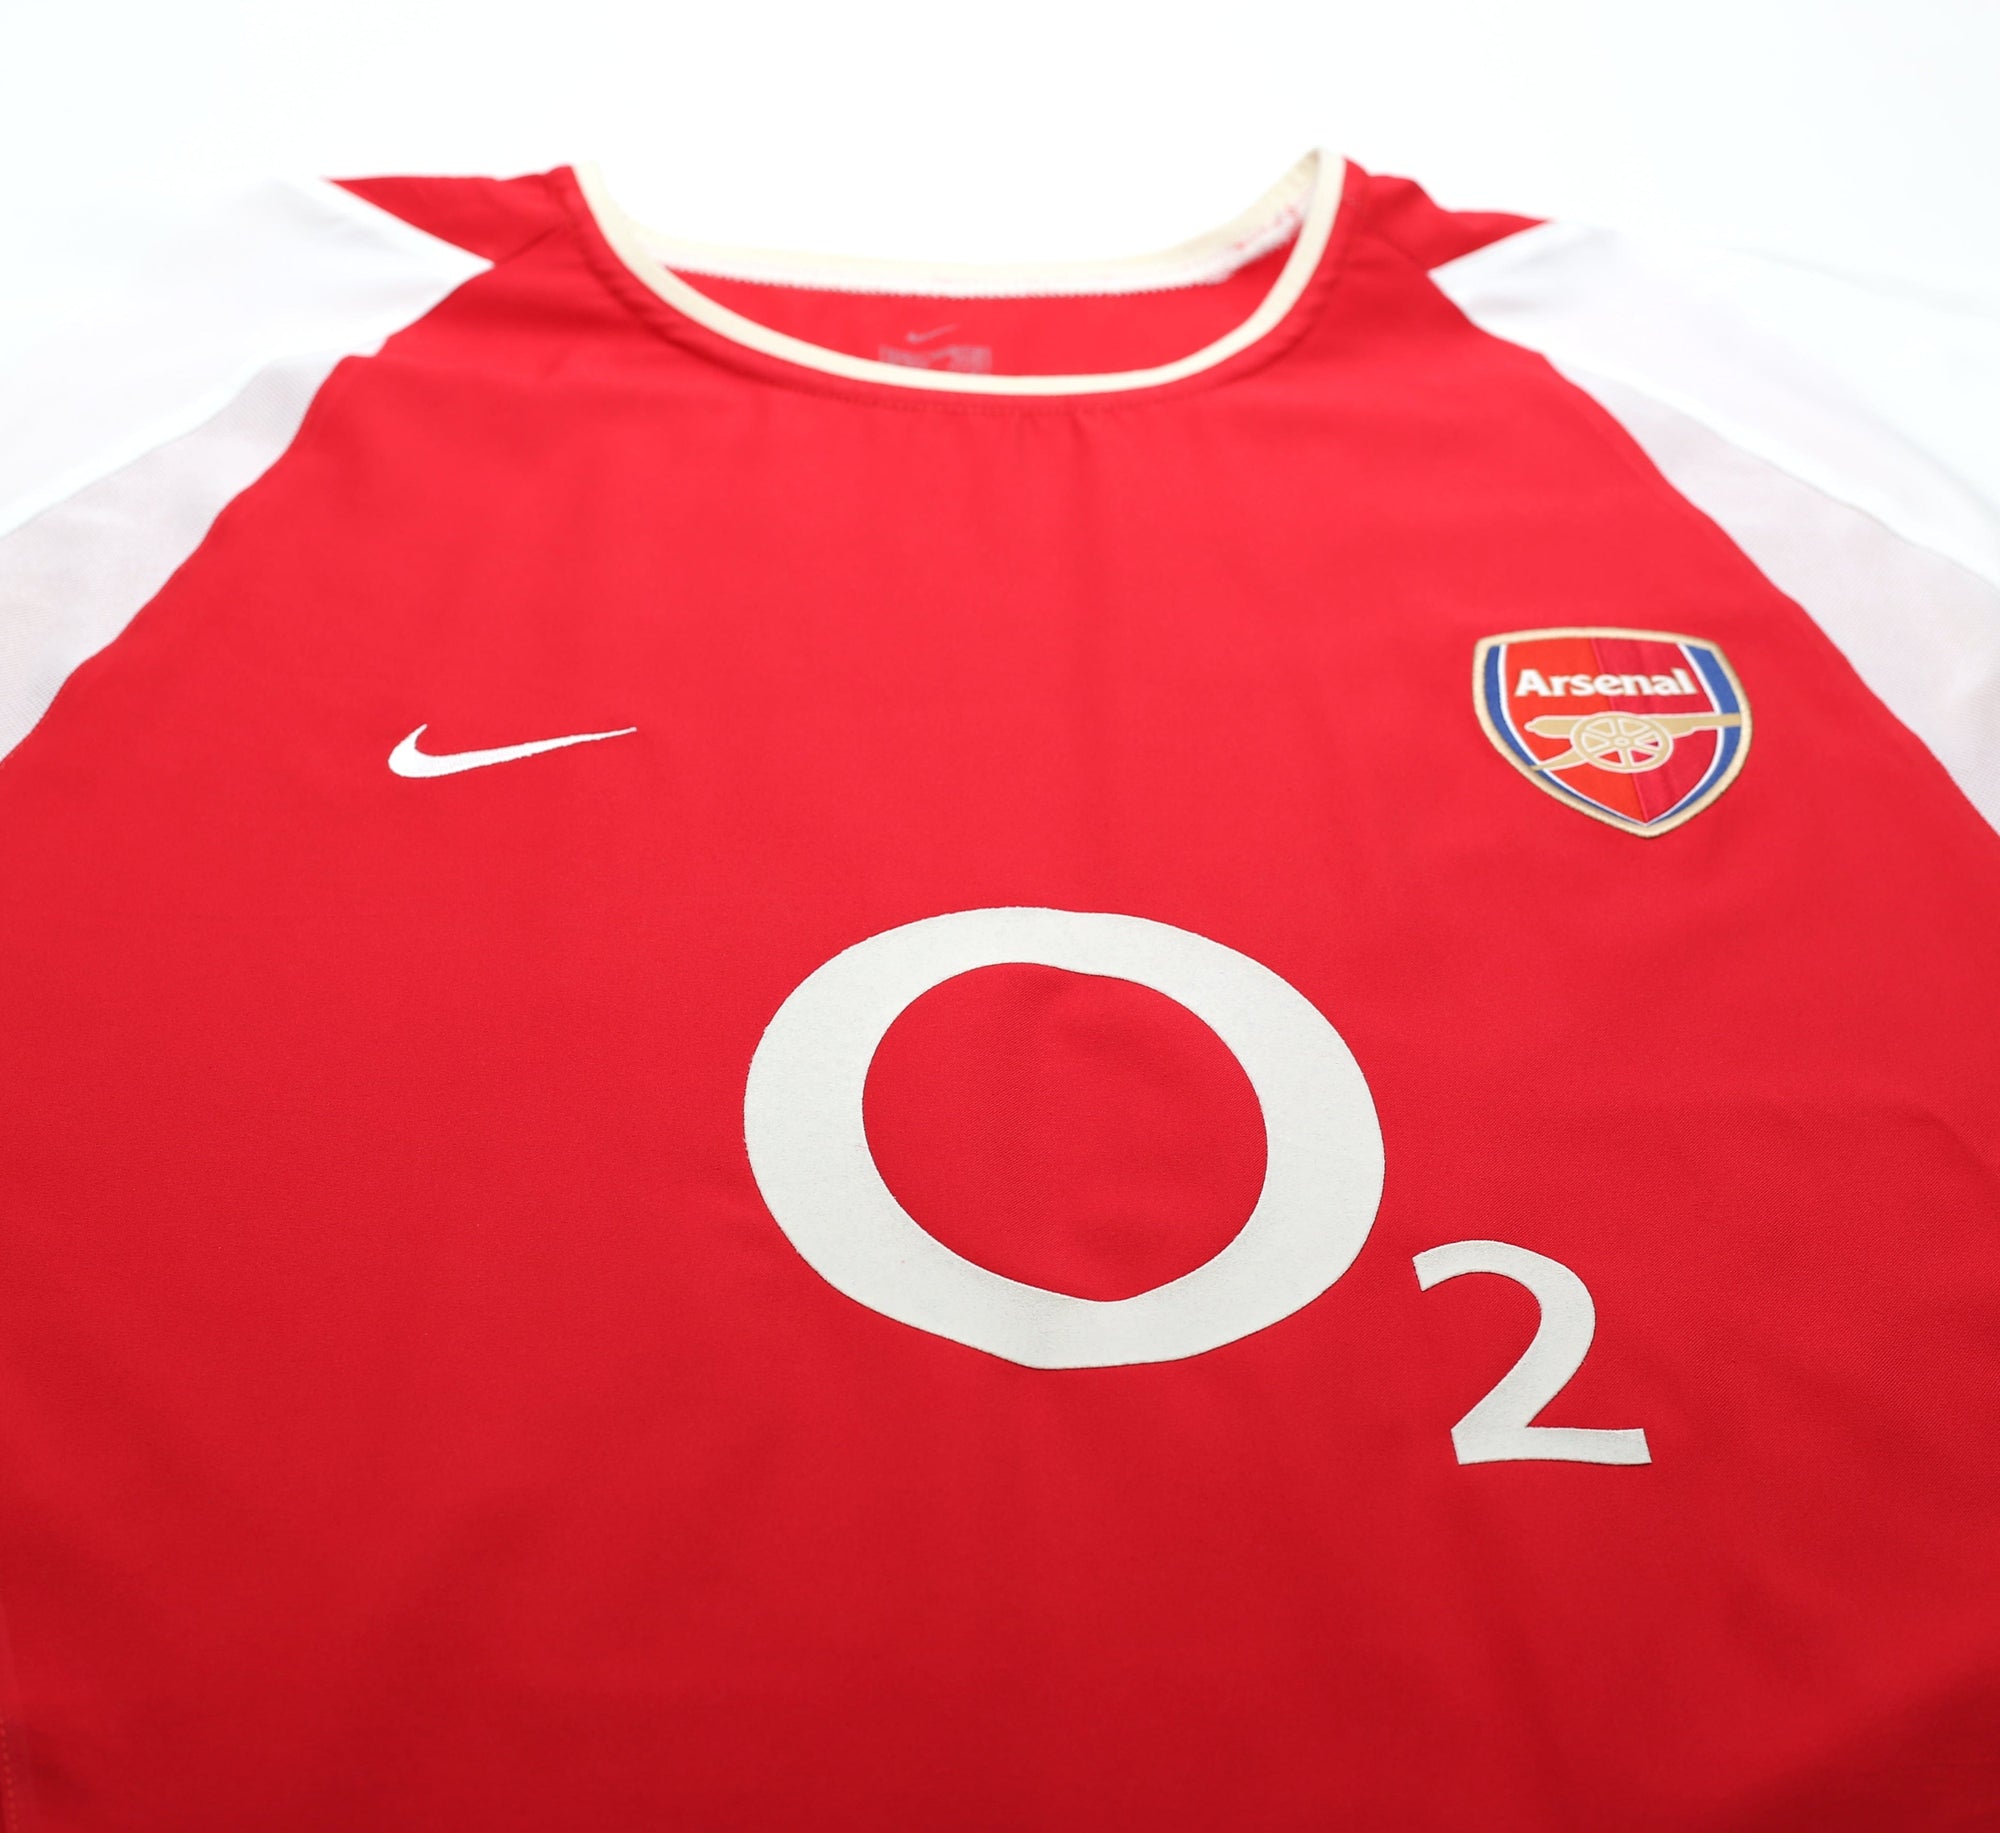 2002/04 HENRY #14 Arsenal Vintage Nike Home Football Shirt Jersey (XL)